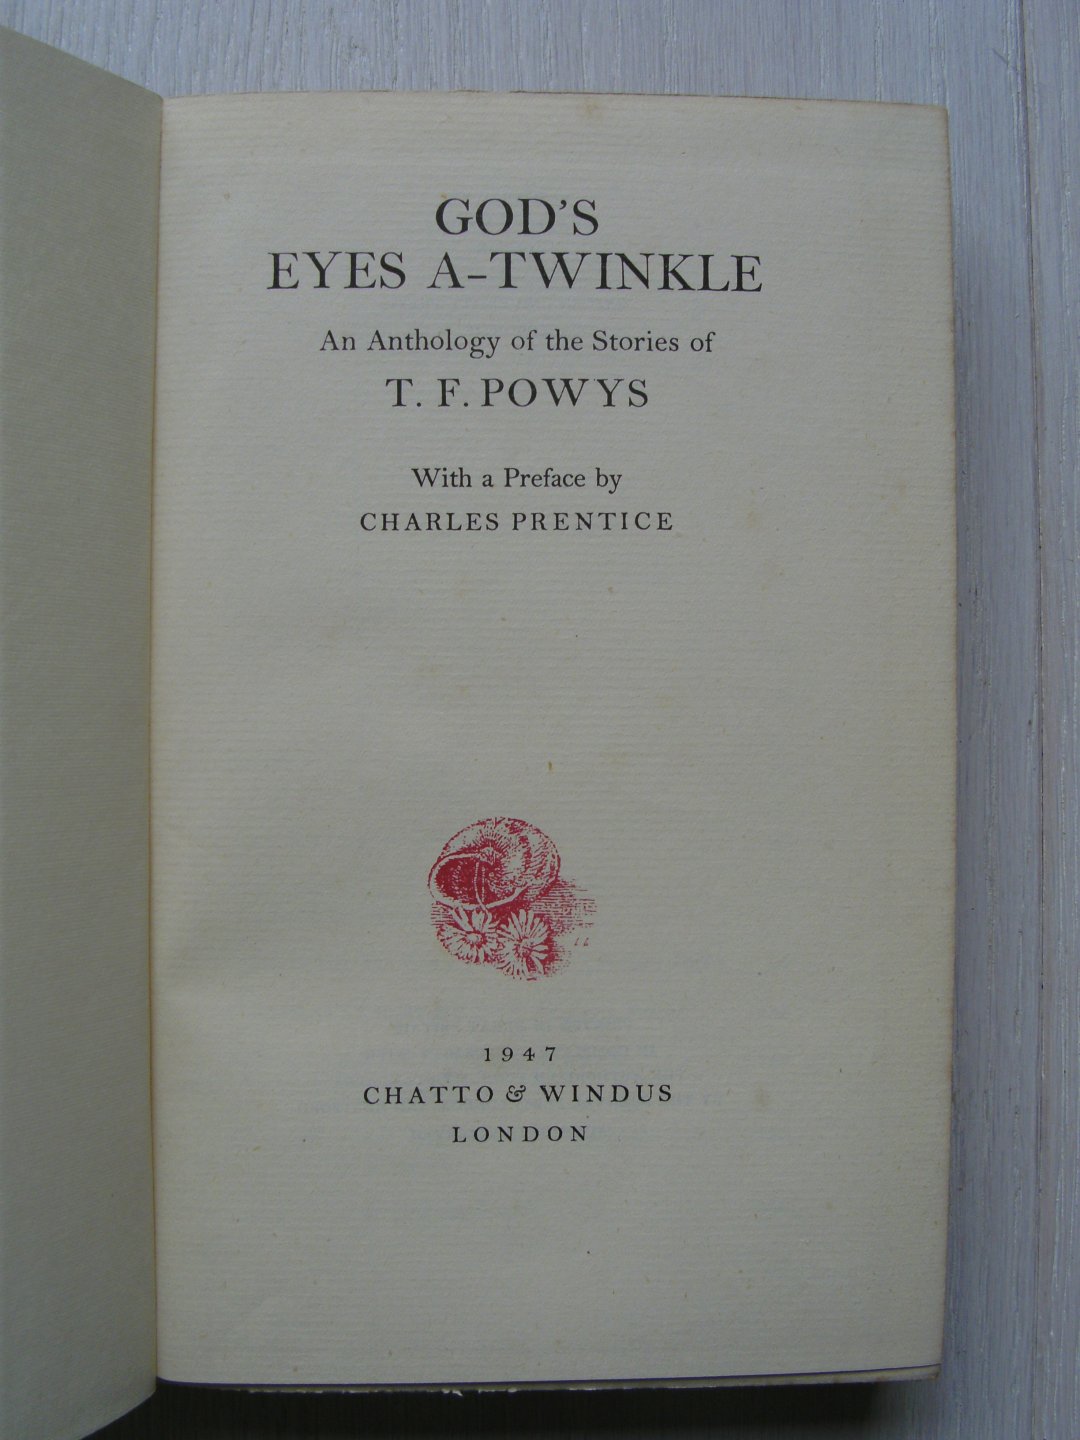 Powyes T.F. - God's eyes a -twinkle